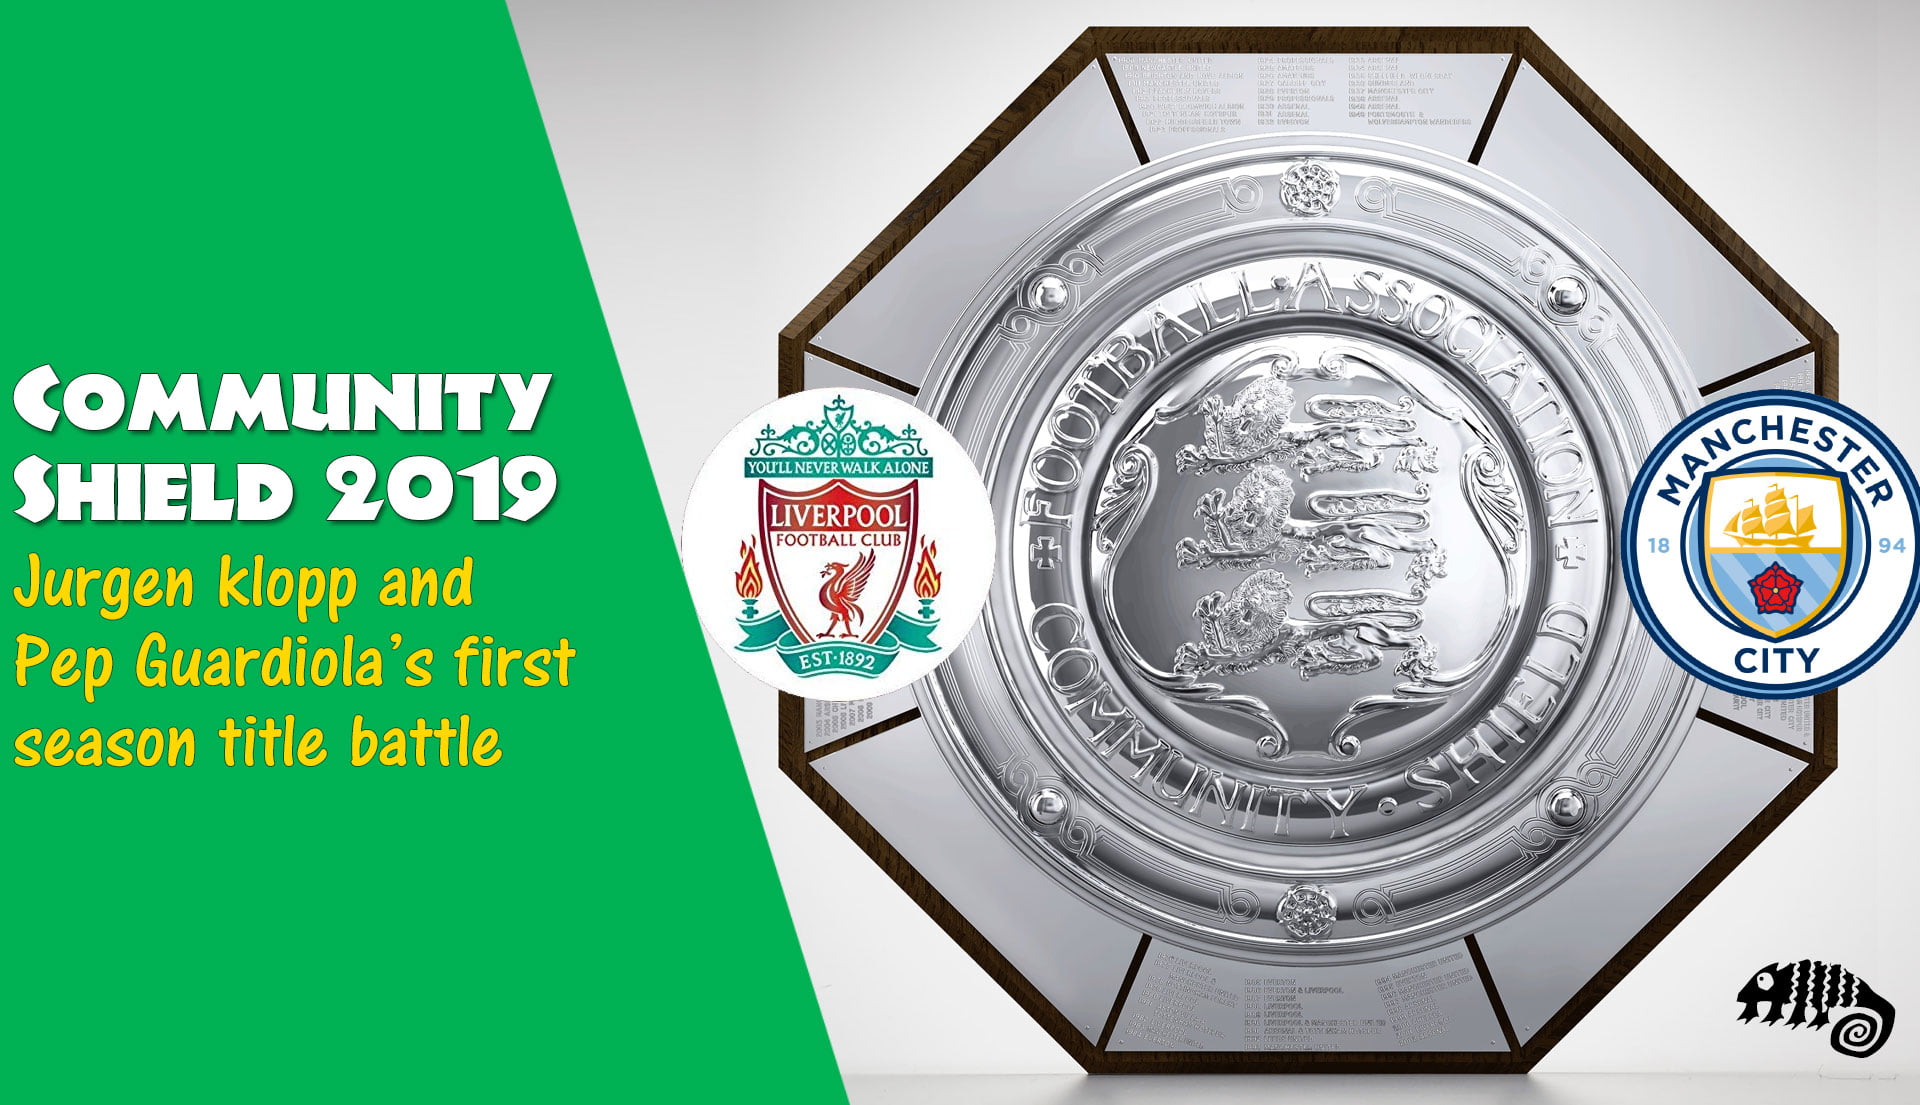 The Community Shield 2019 - Liverpool vs Manchester City ...